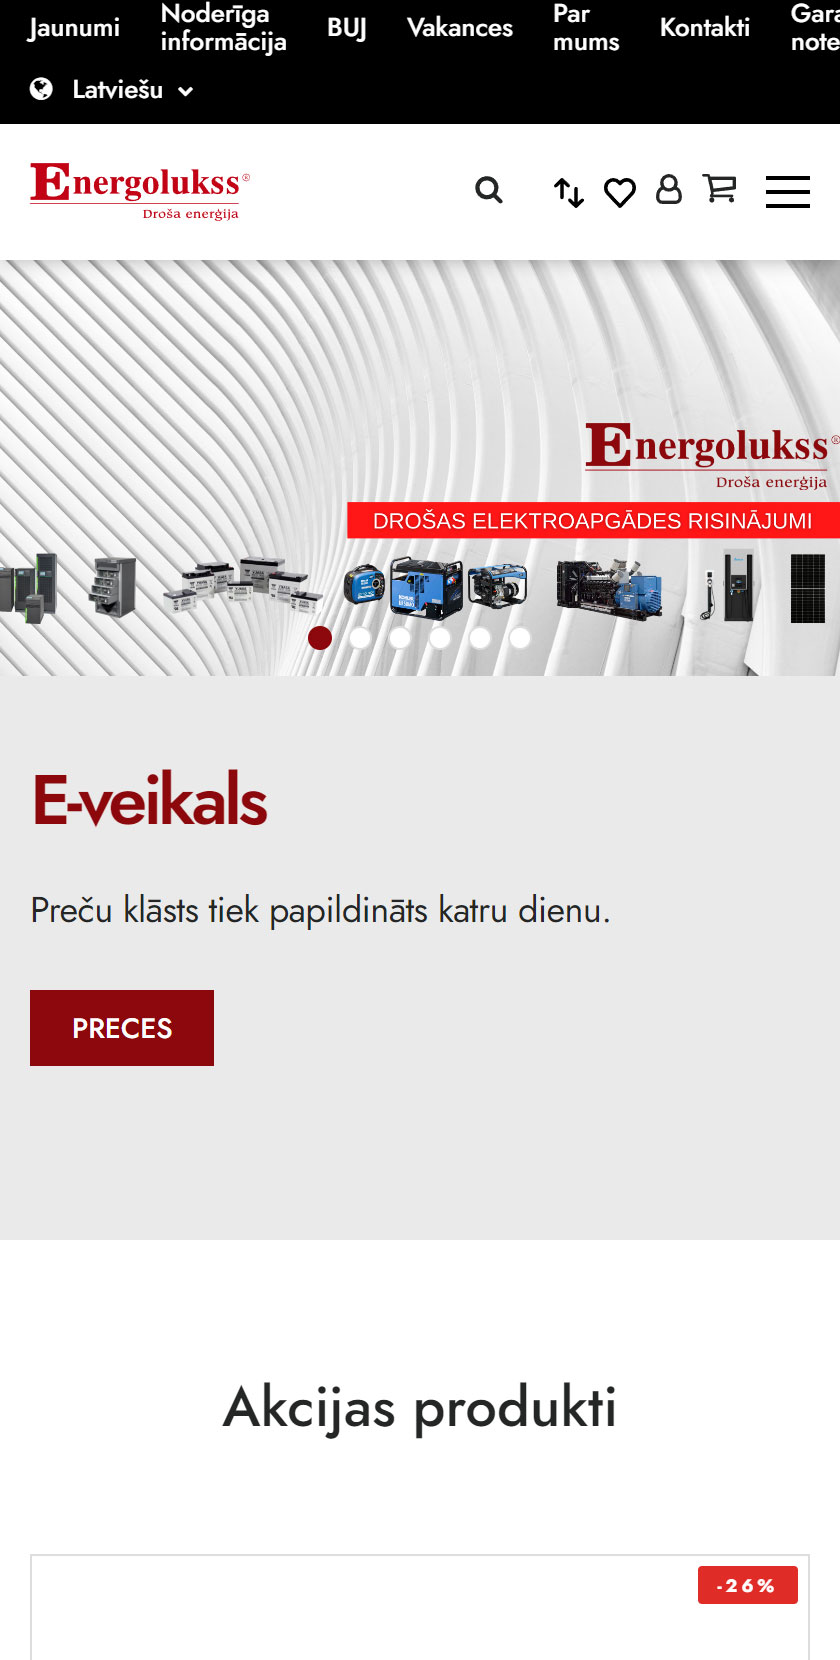 Mobile Screen Header Energolukss Drosa Energija Interneta Veikals Ekomercija Majaslapas Izveide Homepage